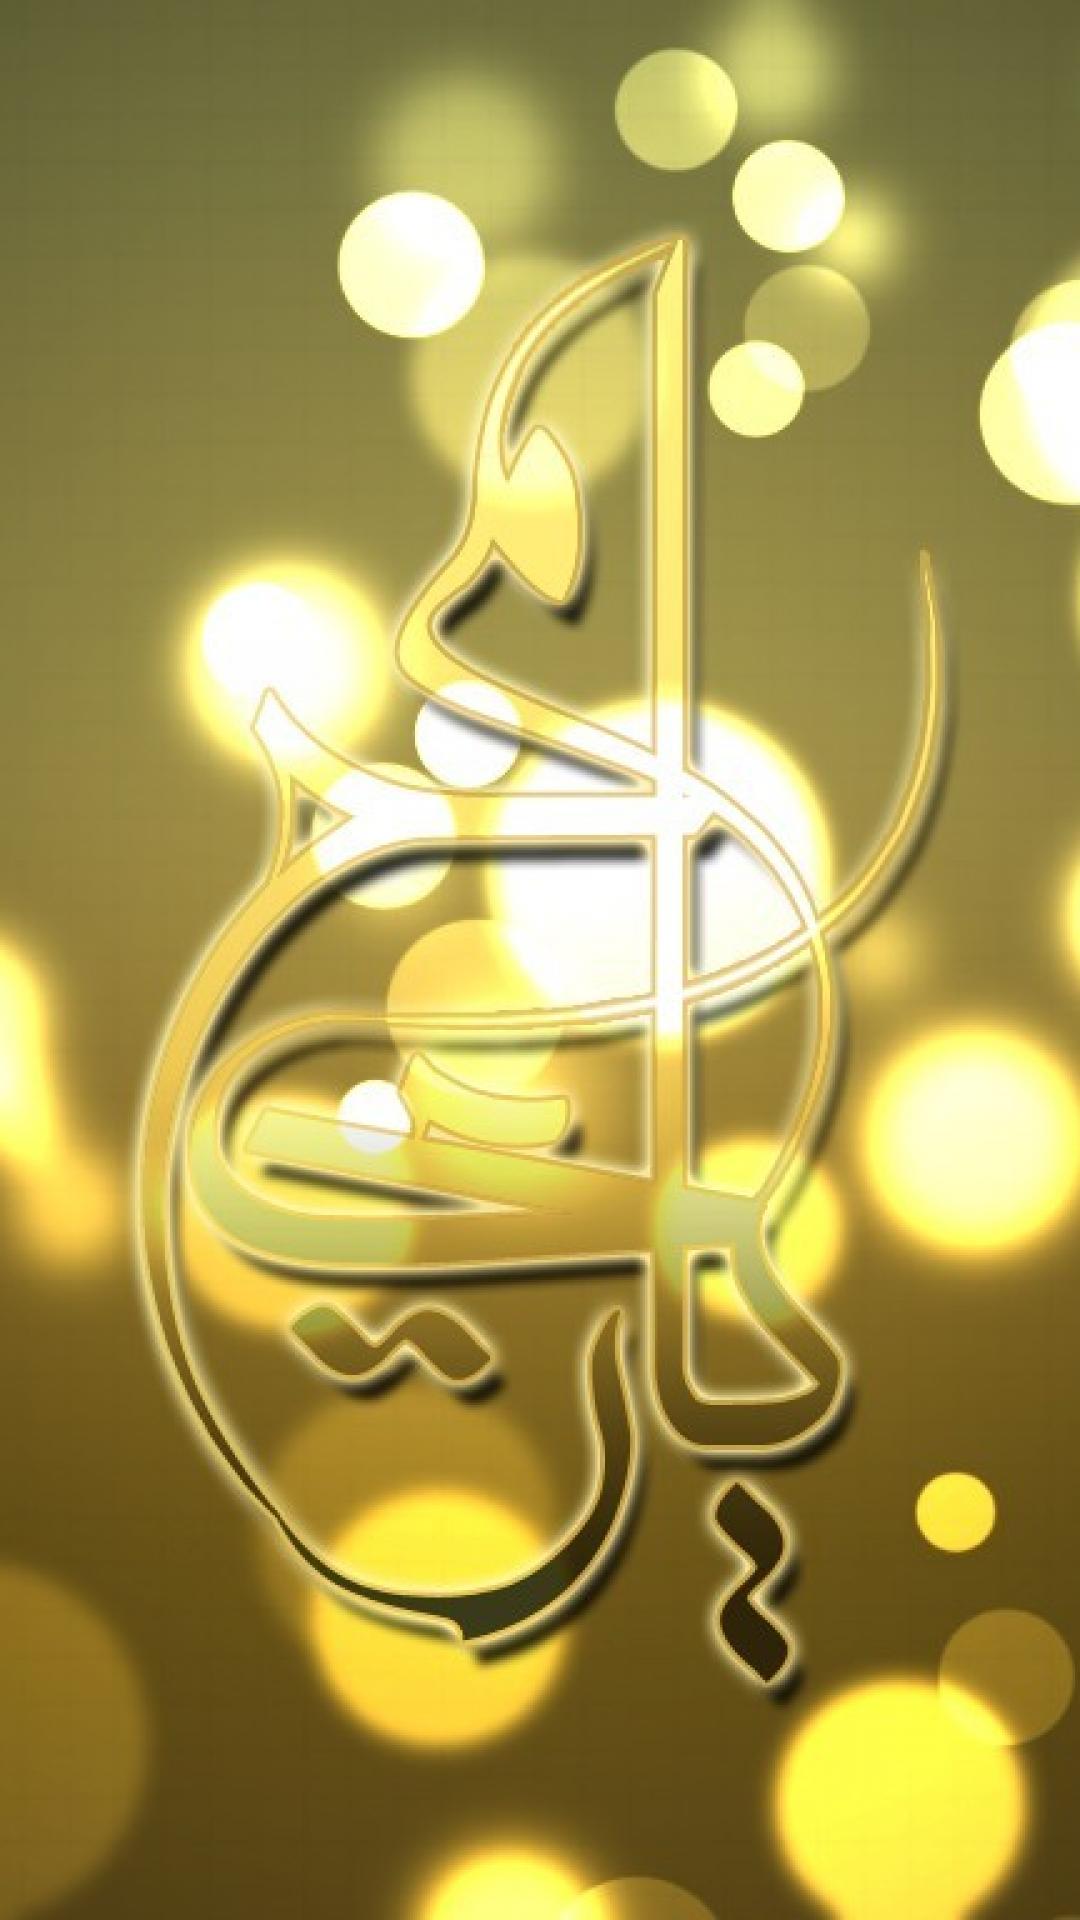 islamic wallpaper hd,yellow,font,illustration,graphics,graphic design